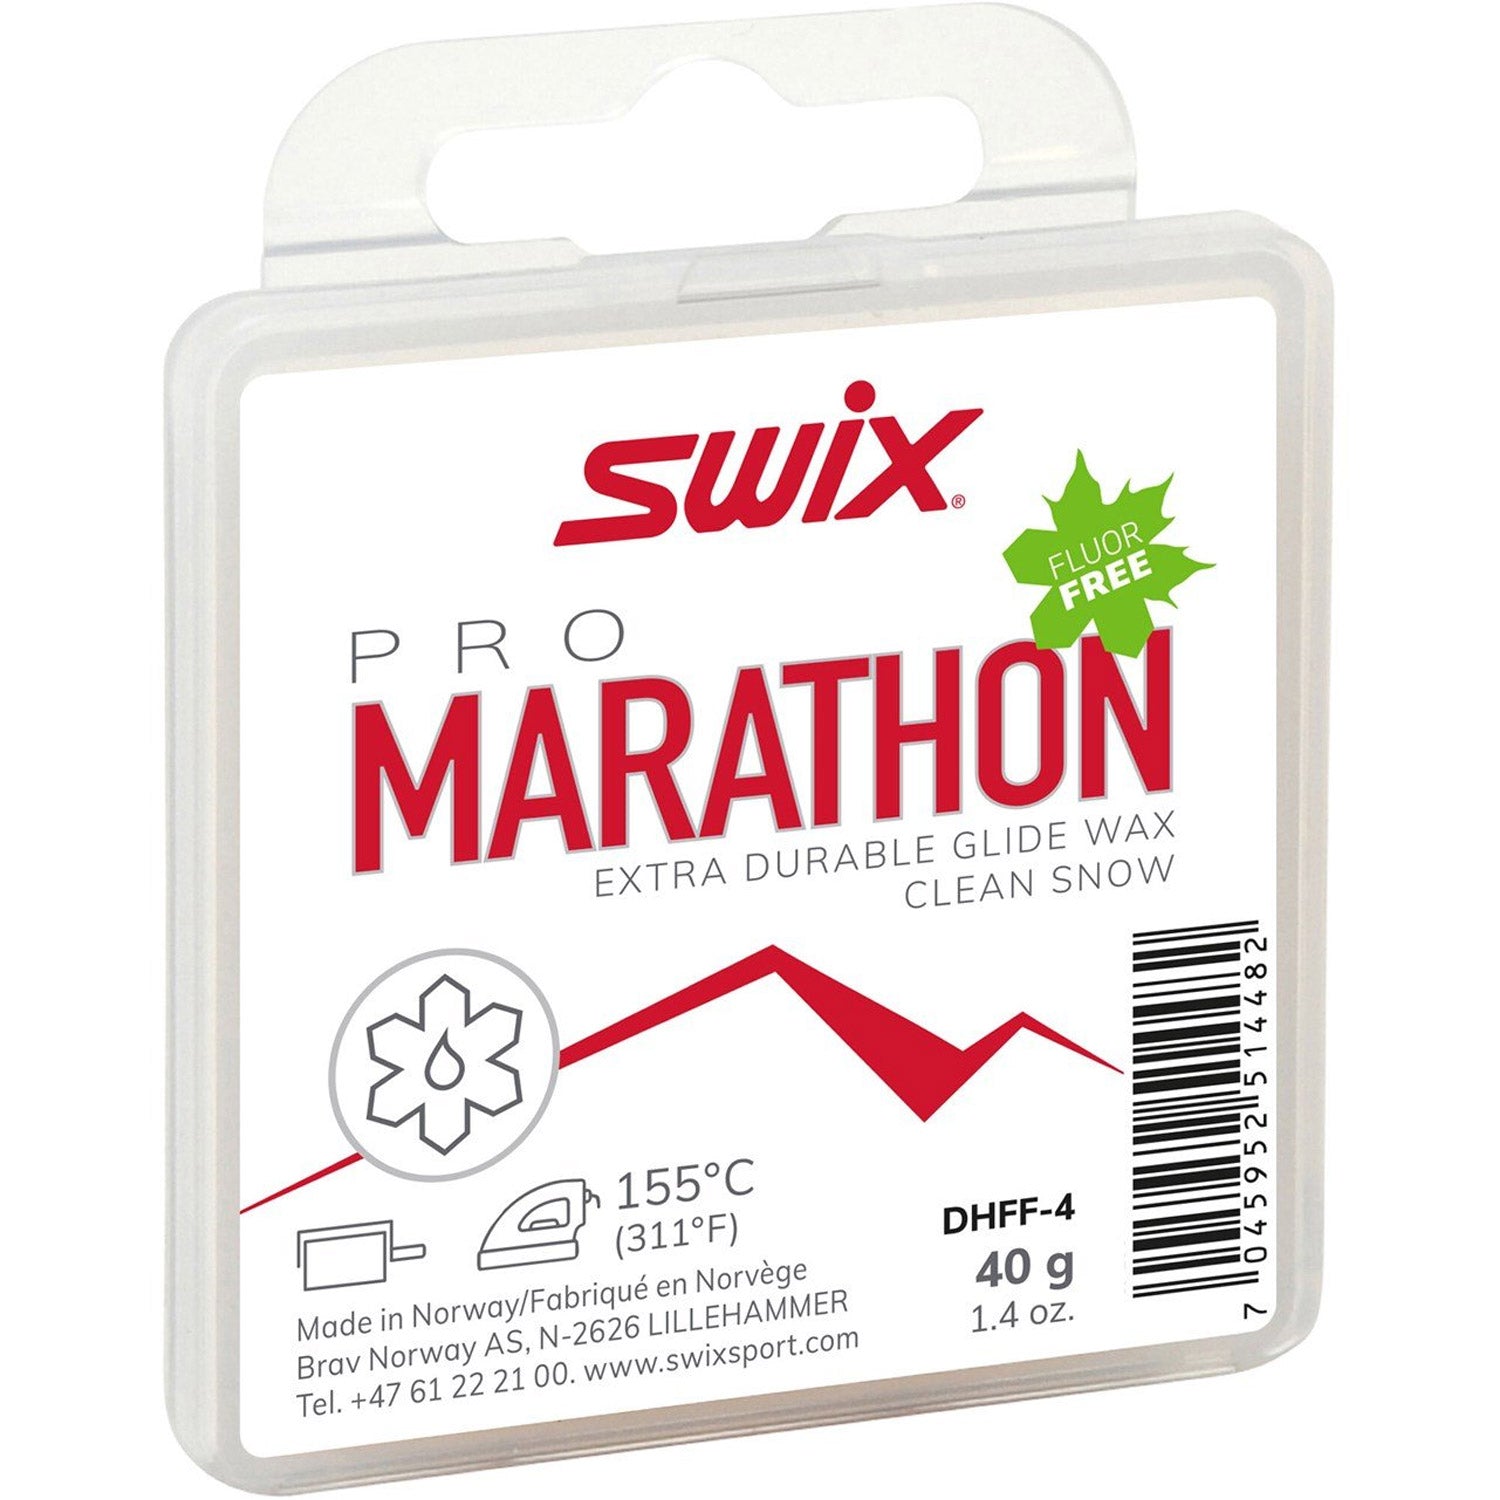 Marathon White Fluor Free Wax 40g DHFF-4